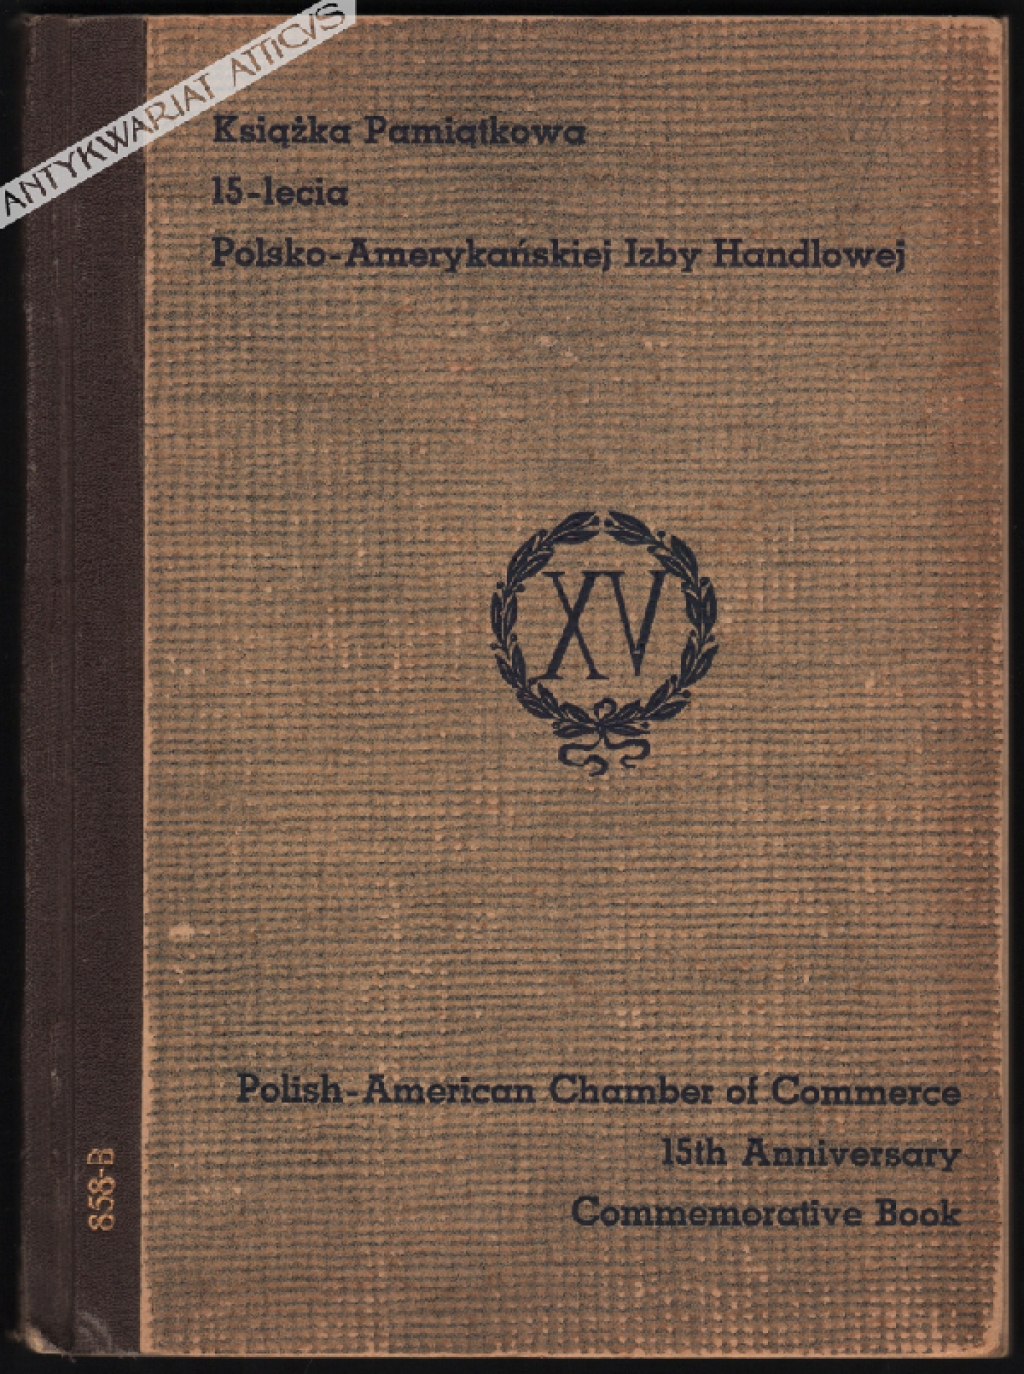 Książka Pamiątkowa 15-lecia Polsko-Amerykańskiej Izby HandlowejPolish-American Chamber of Commerce 15th Anniversary Commemorative Book